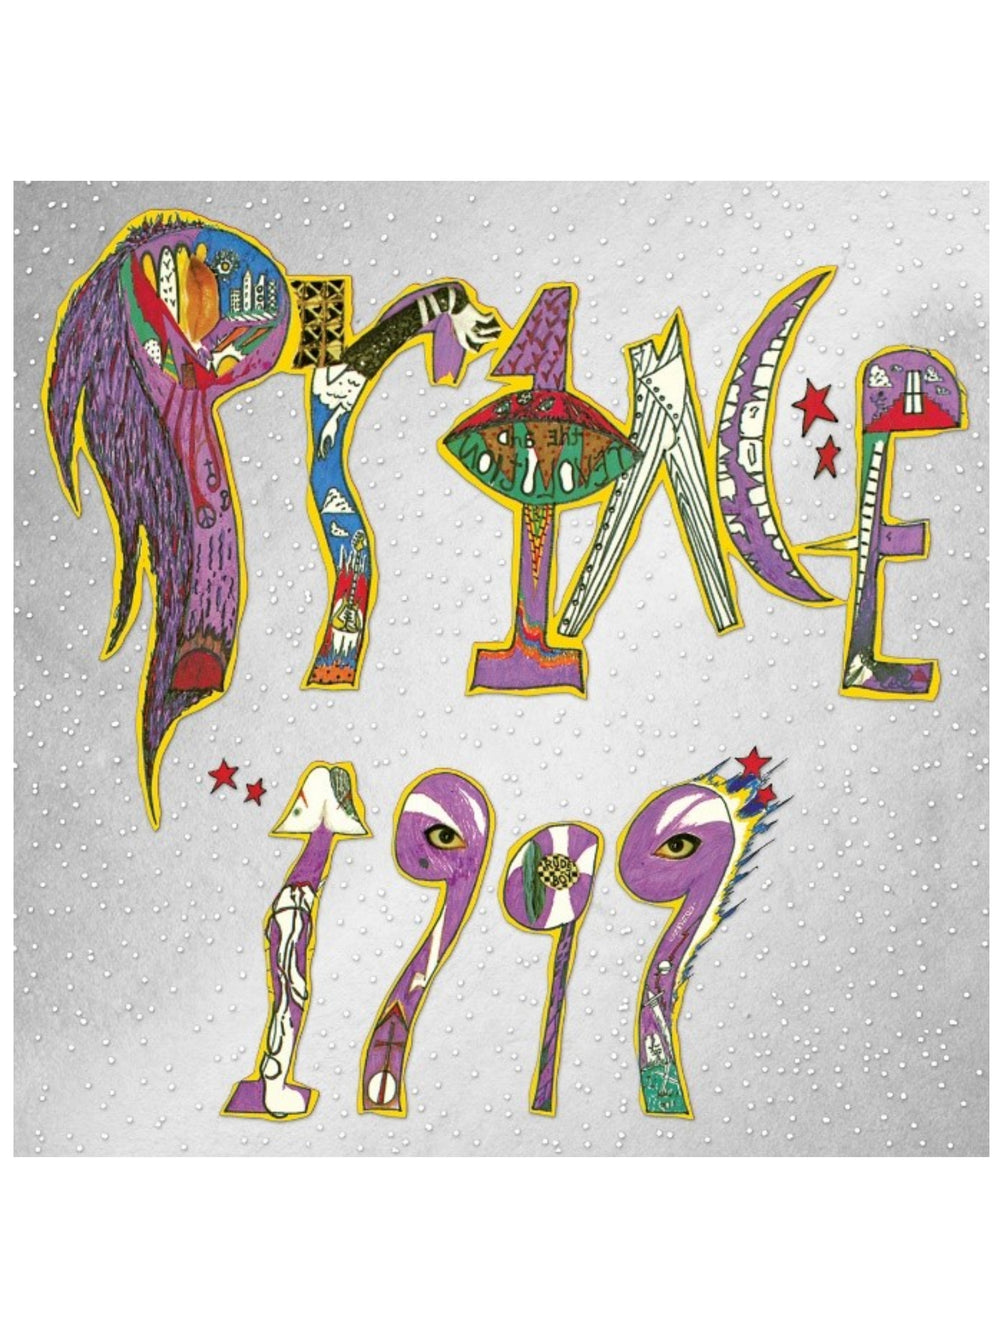 Prince 1999 Super Deluxe Edition 10 LP+DVD 180g Black Vinyl STILL SEALED